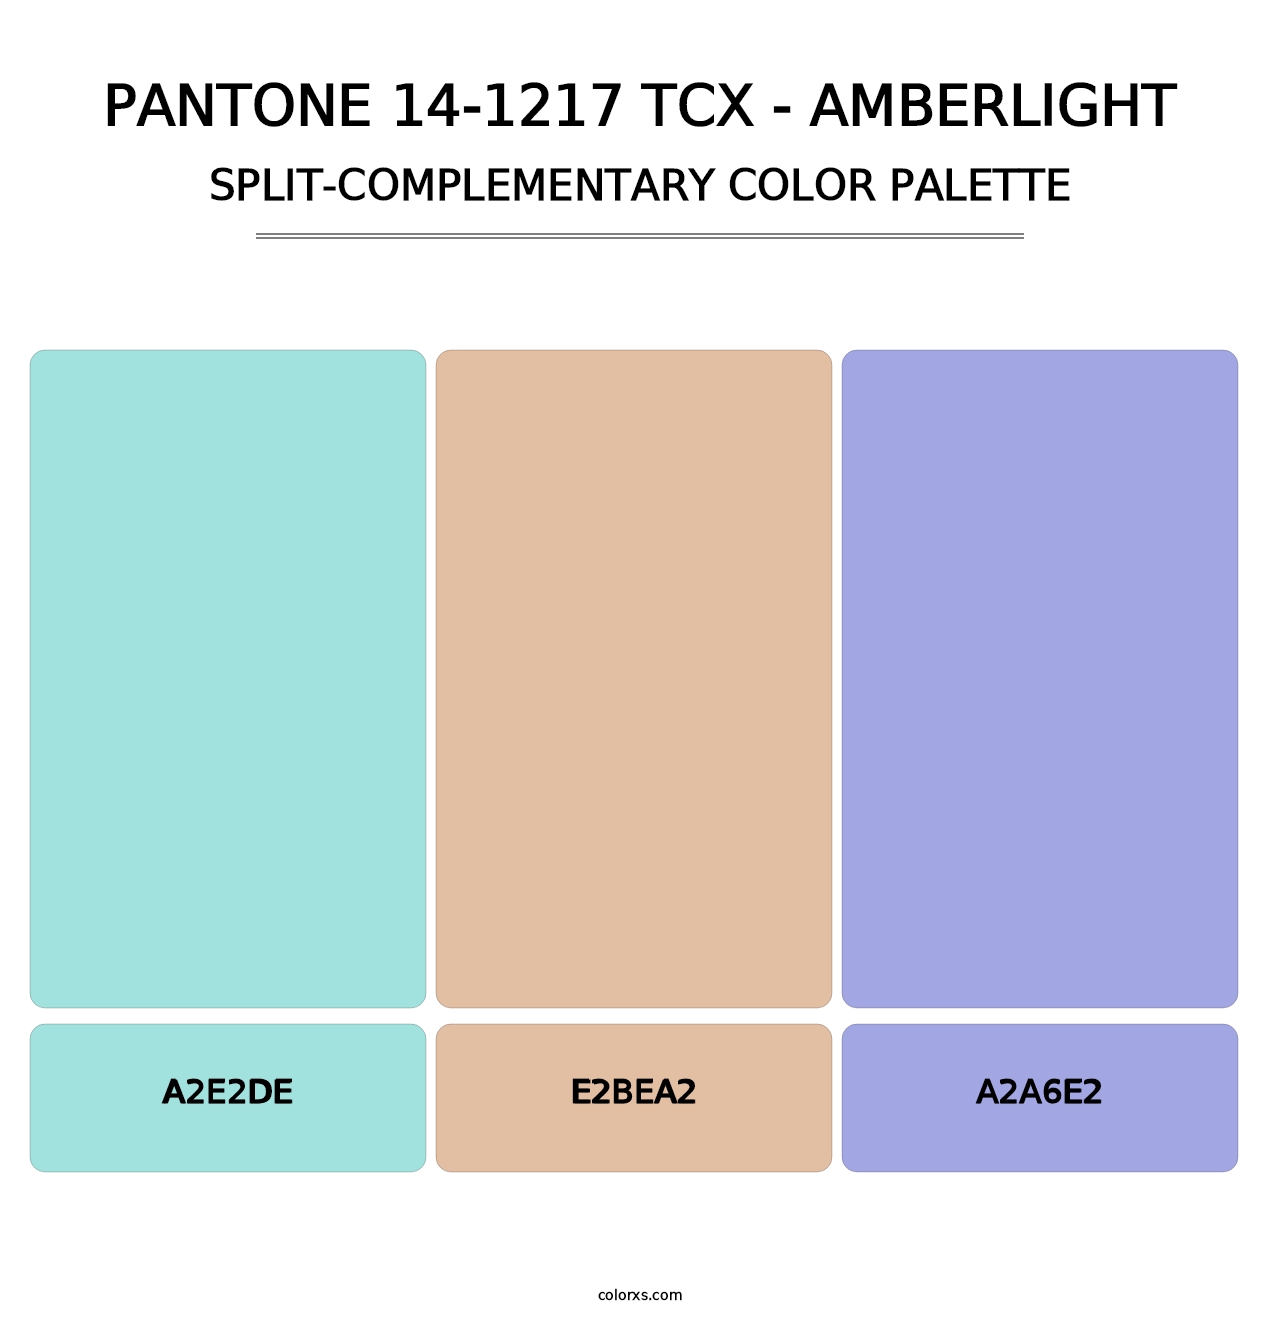 PANTONE 14-1217 TCX - Amberlight - Split-Complementary Color Palette